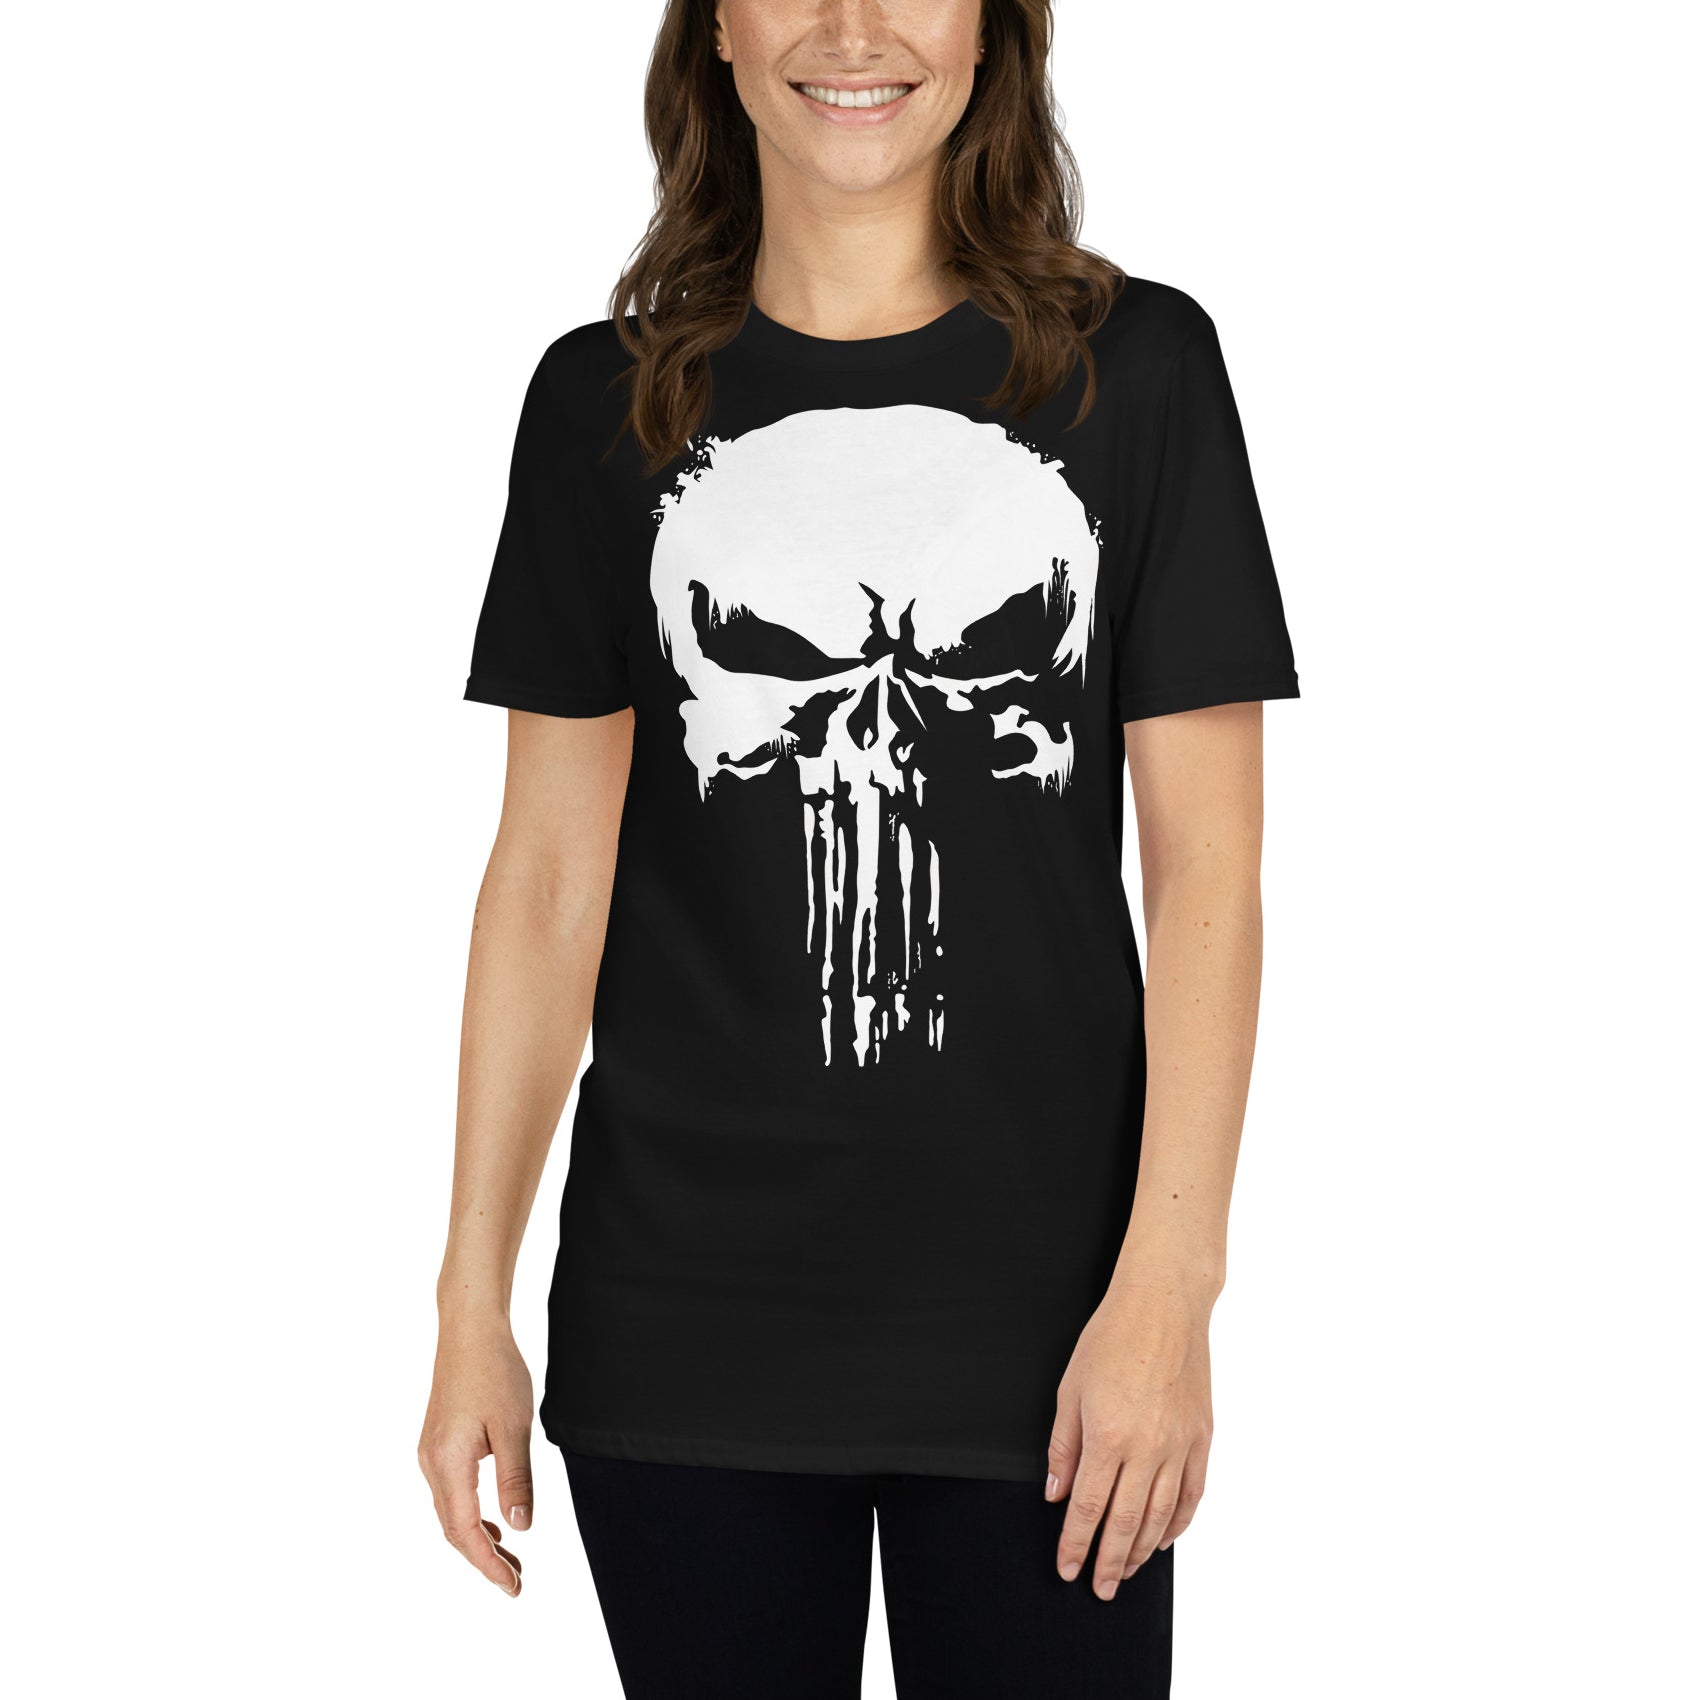 Camiseta Skull de The Punisher. Color Negro.